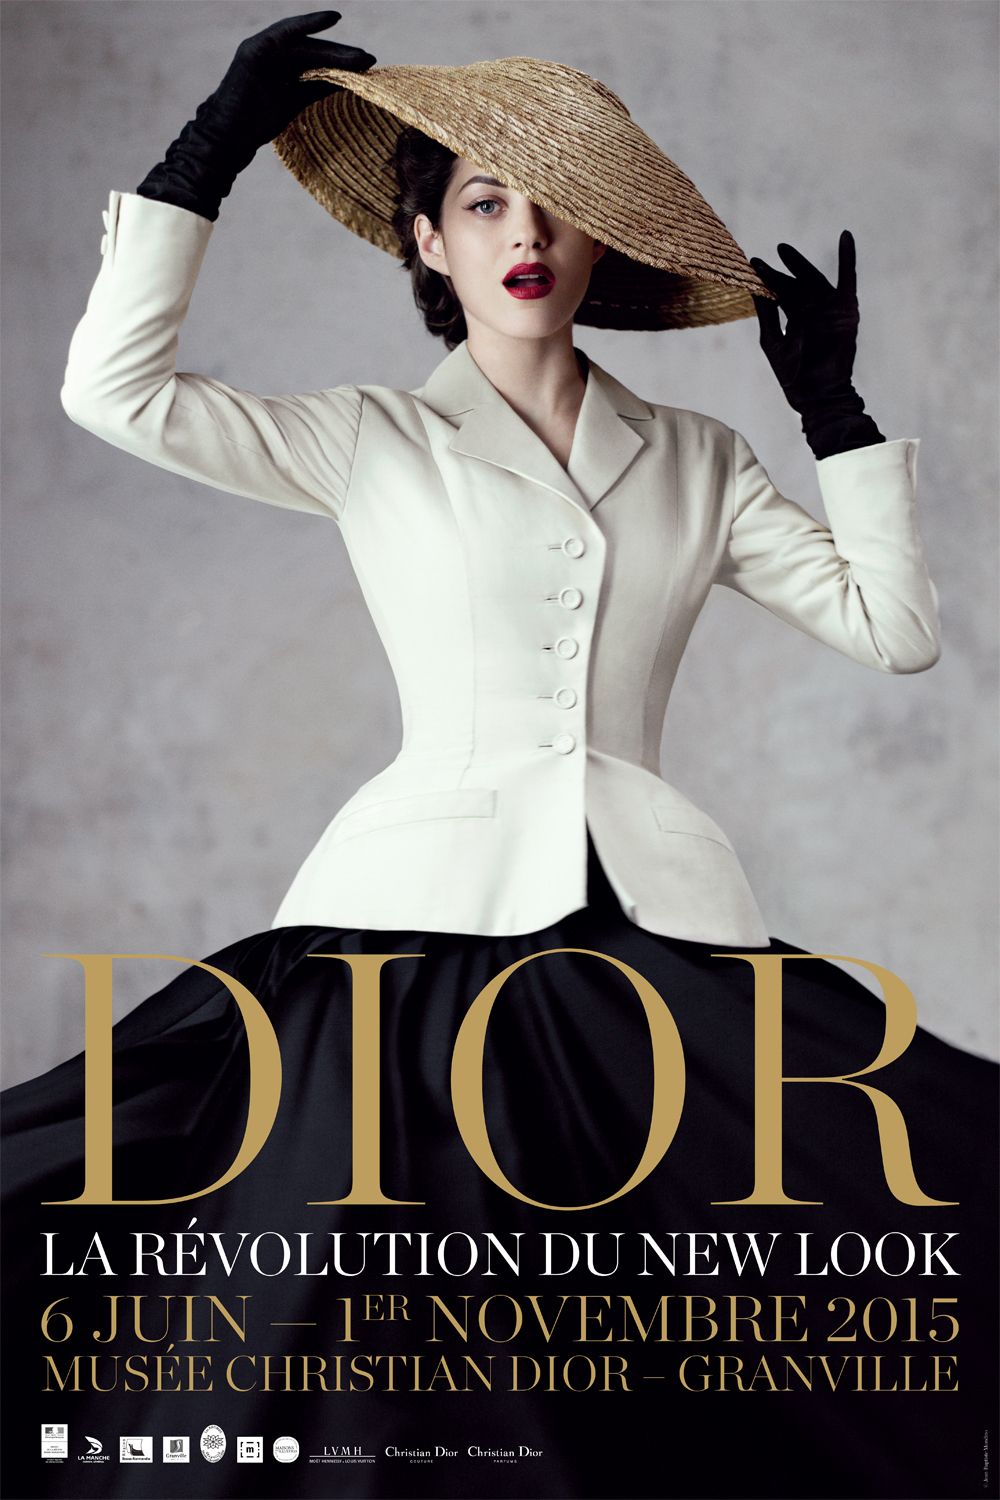 Dior's New Look Revolution